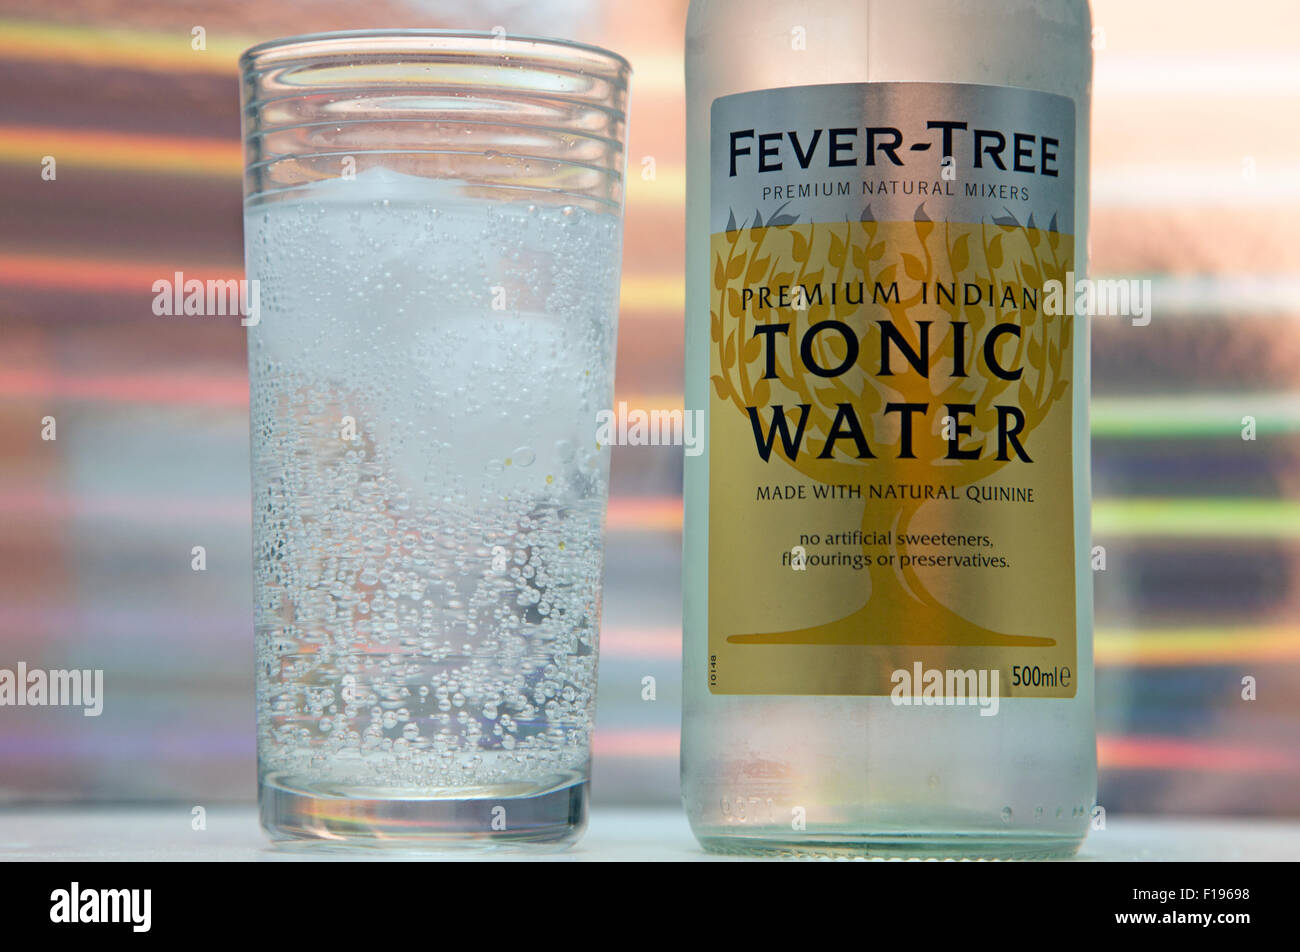 Premio Fever-Tree Indian tonic acqua, Londra Foto Stock